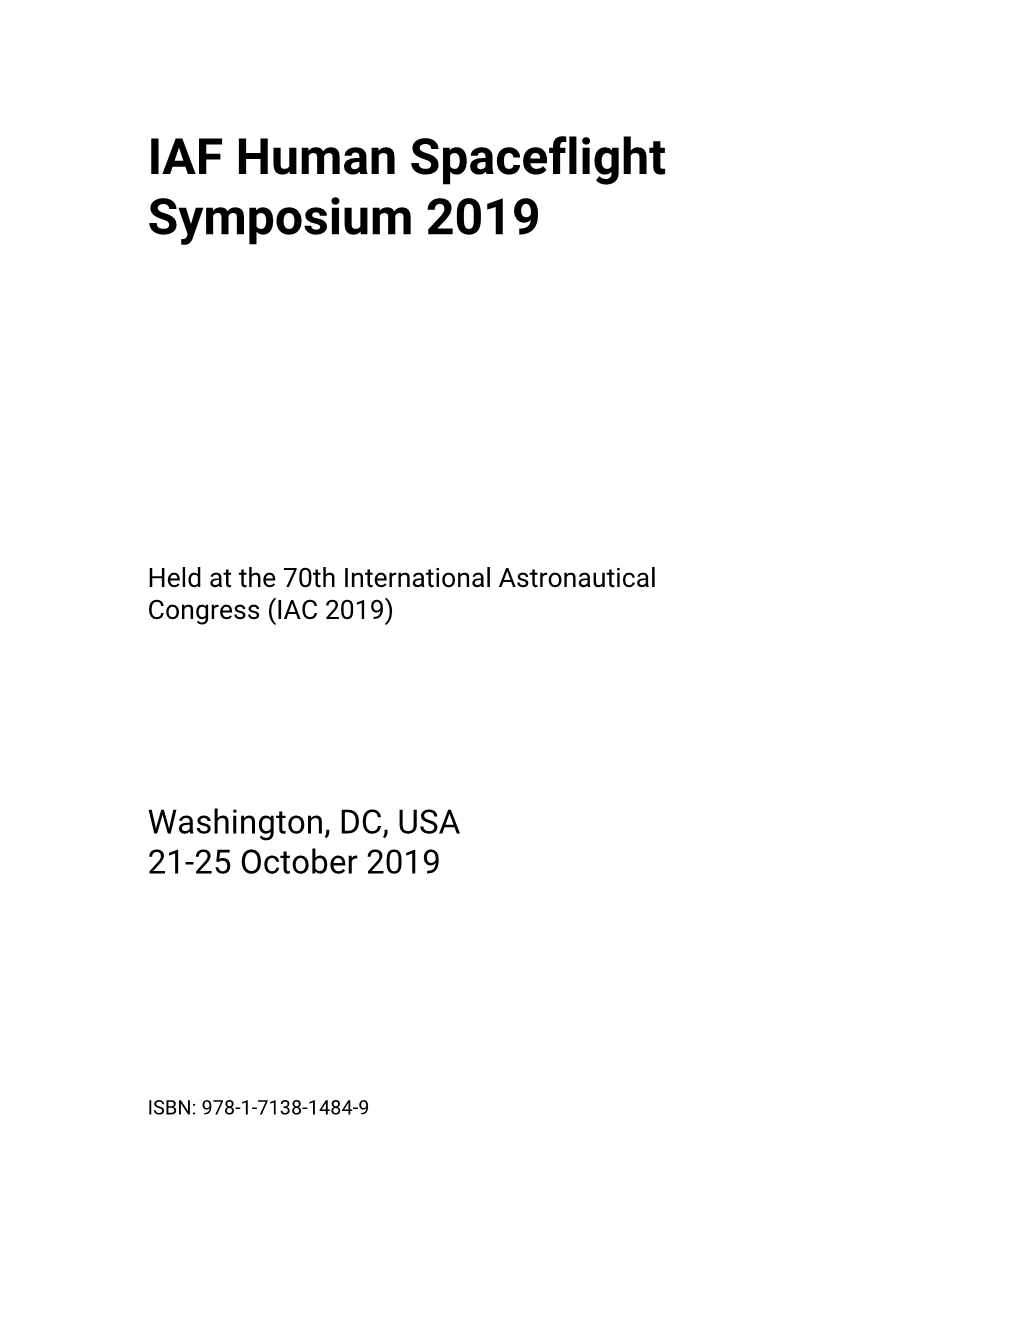 IAF Human Spaceflight Symposium 2019